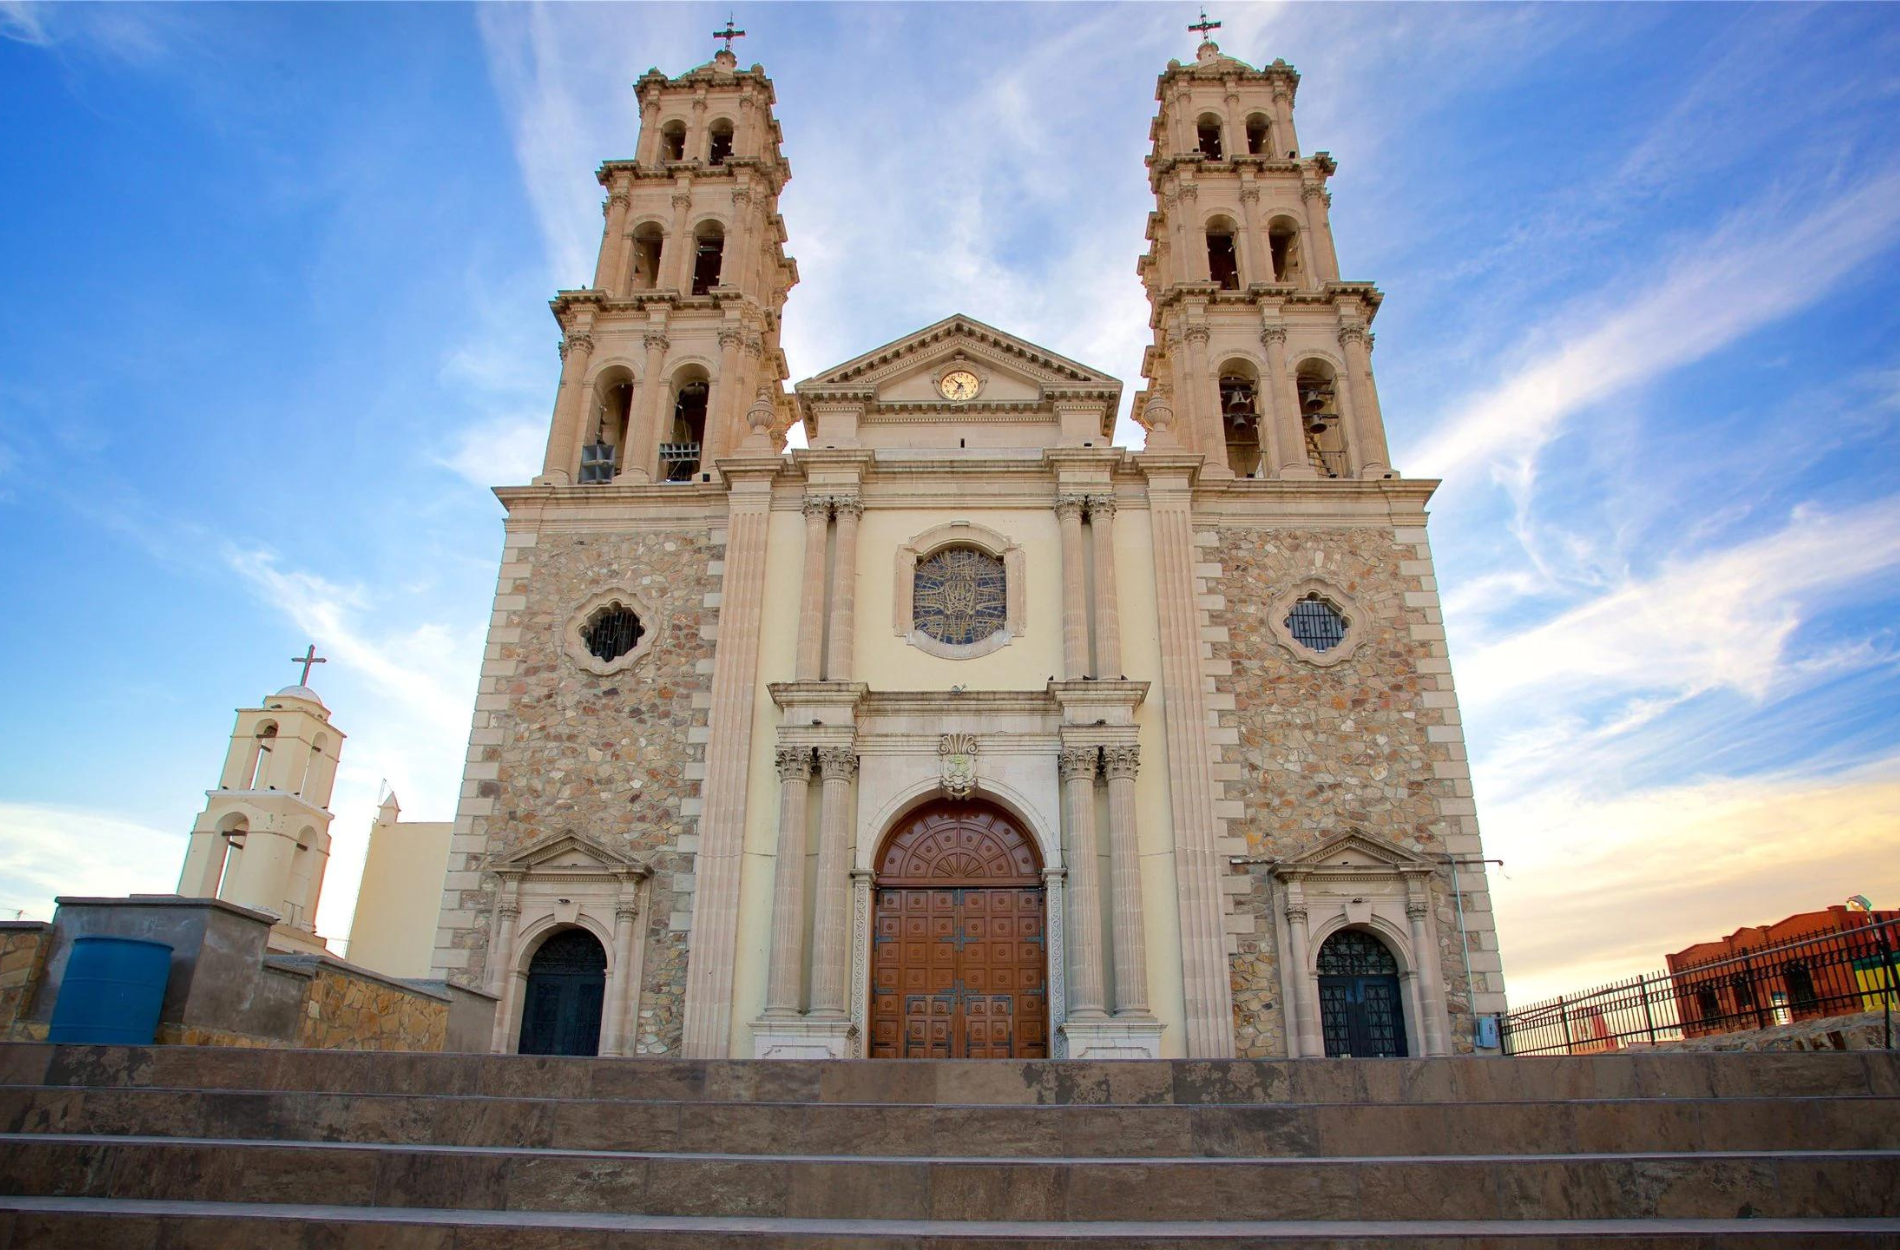 La Historia de la Catedral de Chihuahua